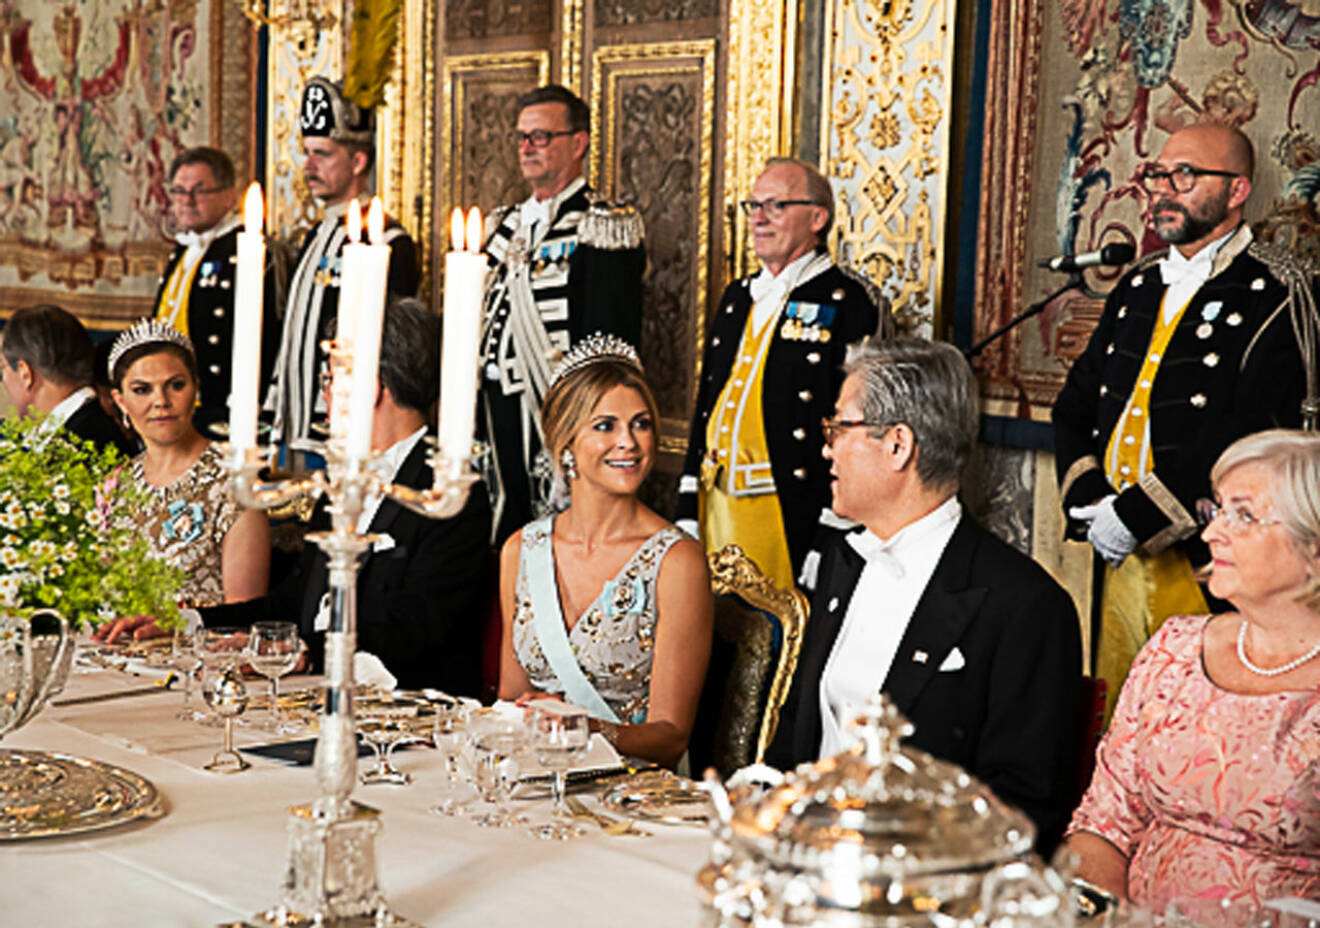 Prinsessan Madeleine med sin bordsherre under galamiddagen på Kungliga slottet.